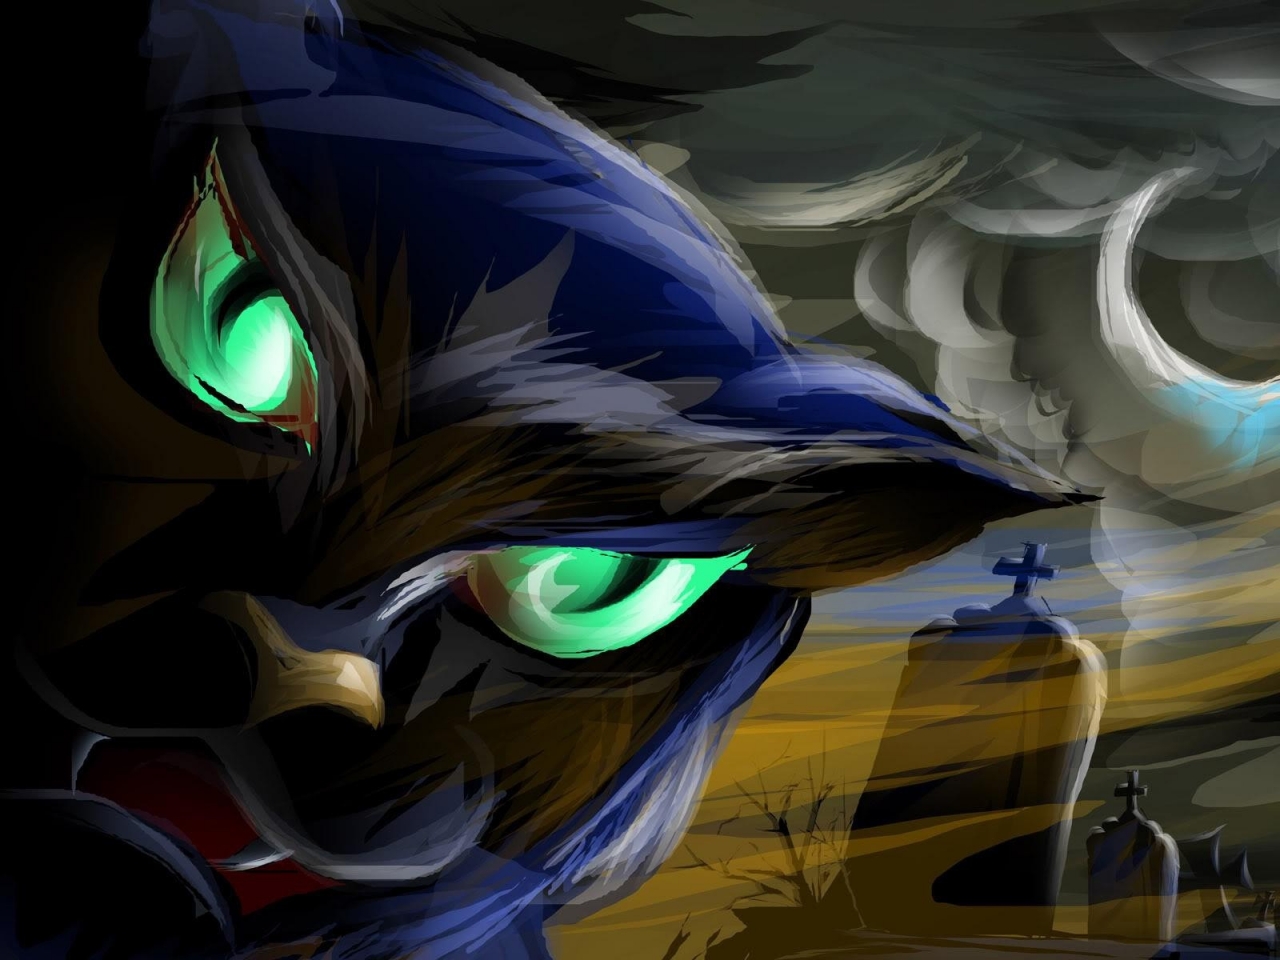 Halloween Black Cat Illustration for 1280 x 960 resolution